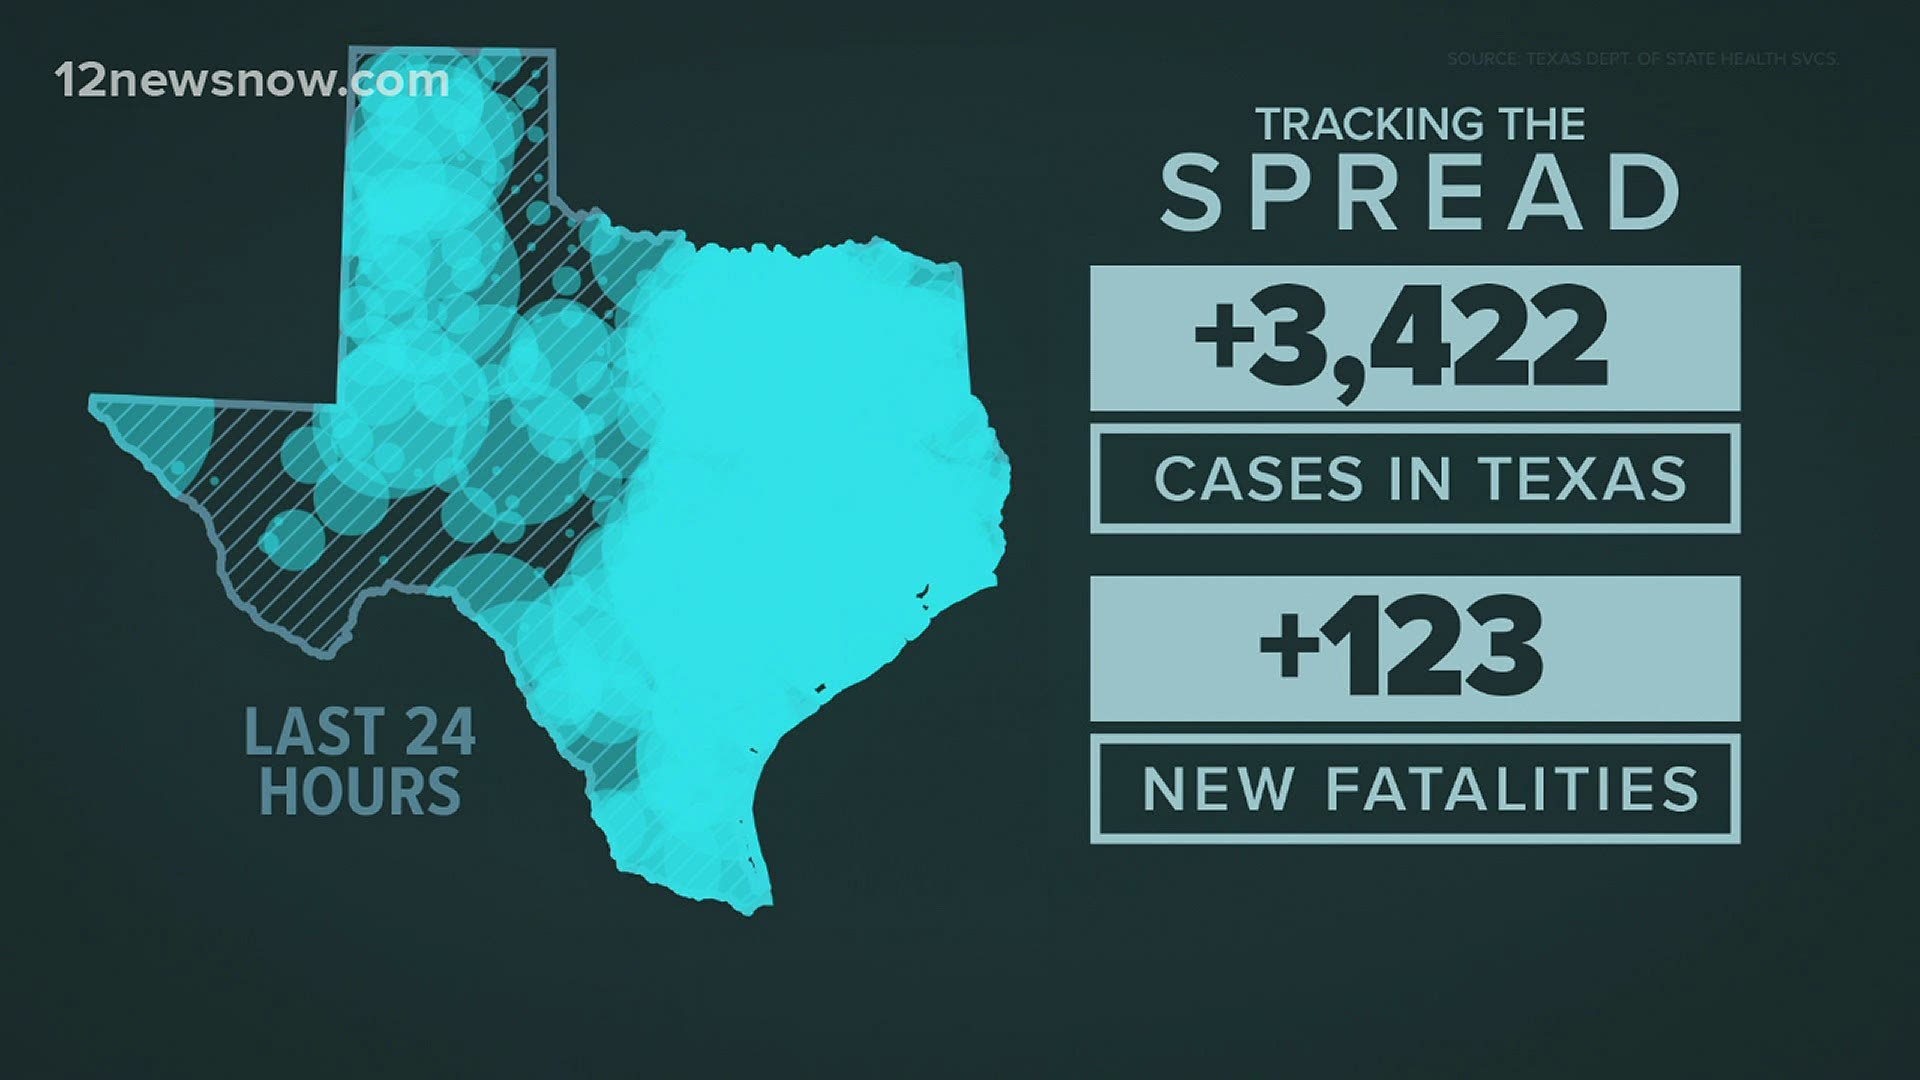 Texas also had 134 COVID-19 fatalities on Friday.